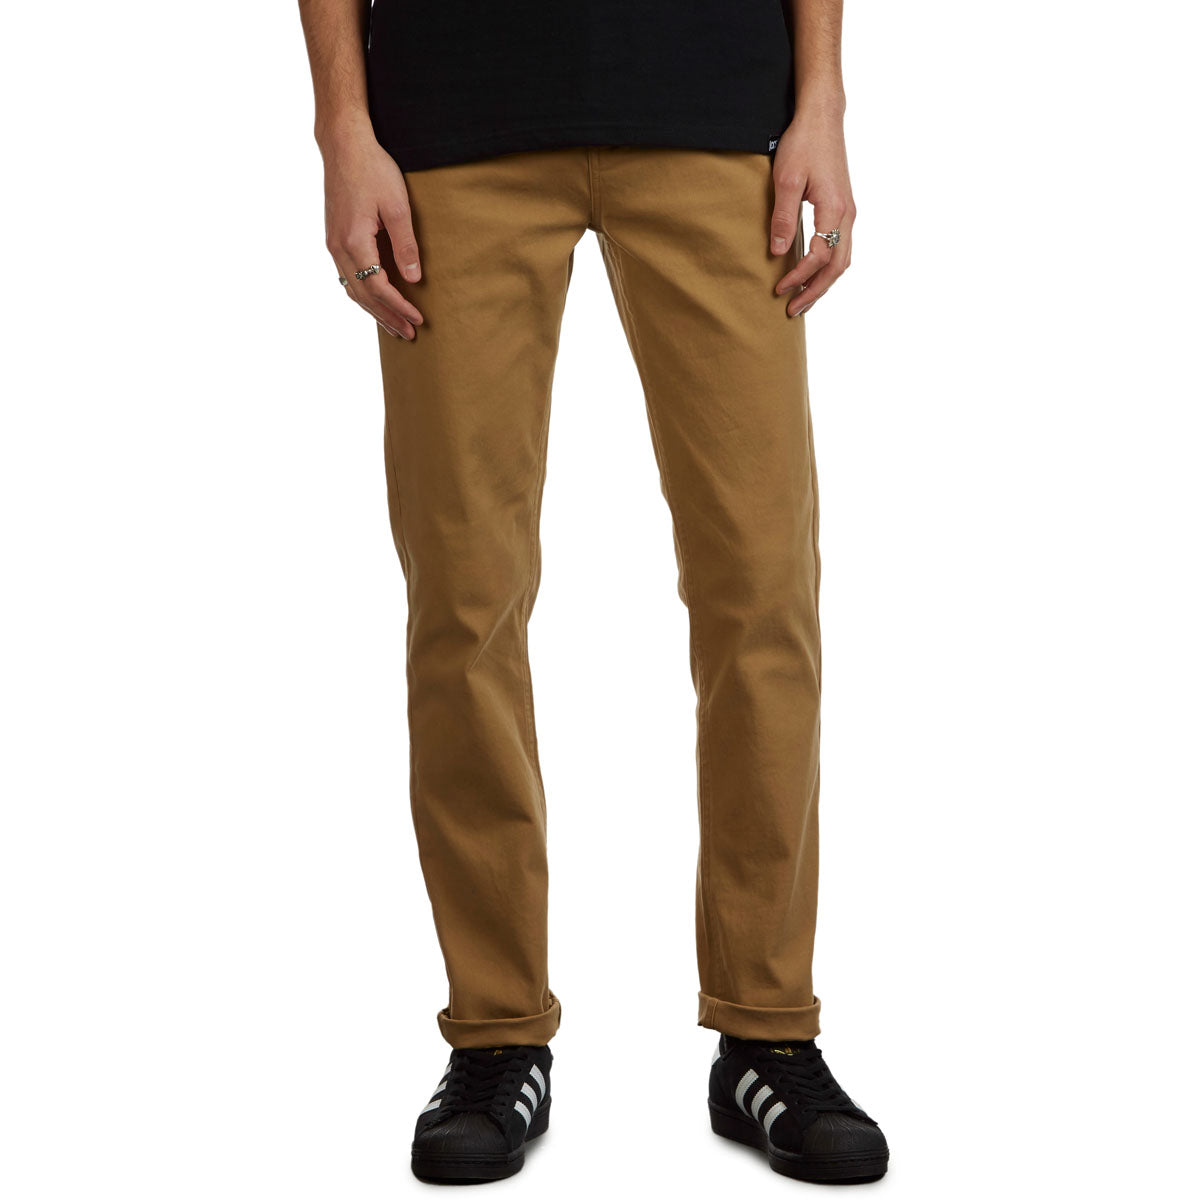 CCS Standard Plus Slim Chino Pants - Khaki image 4